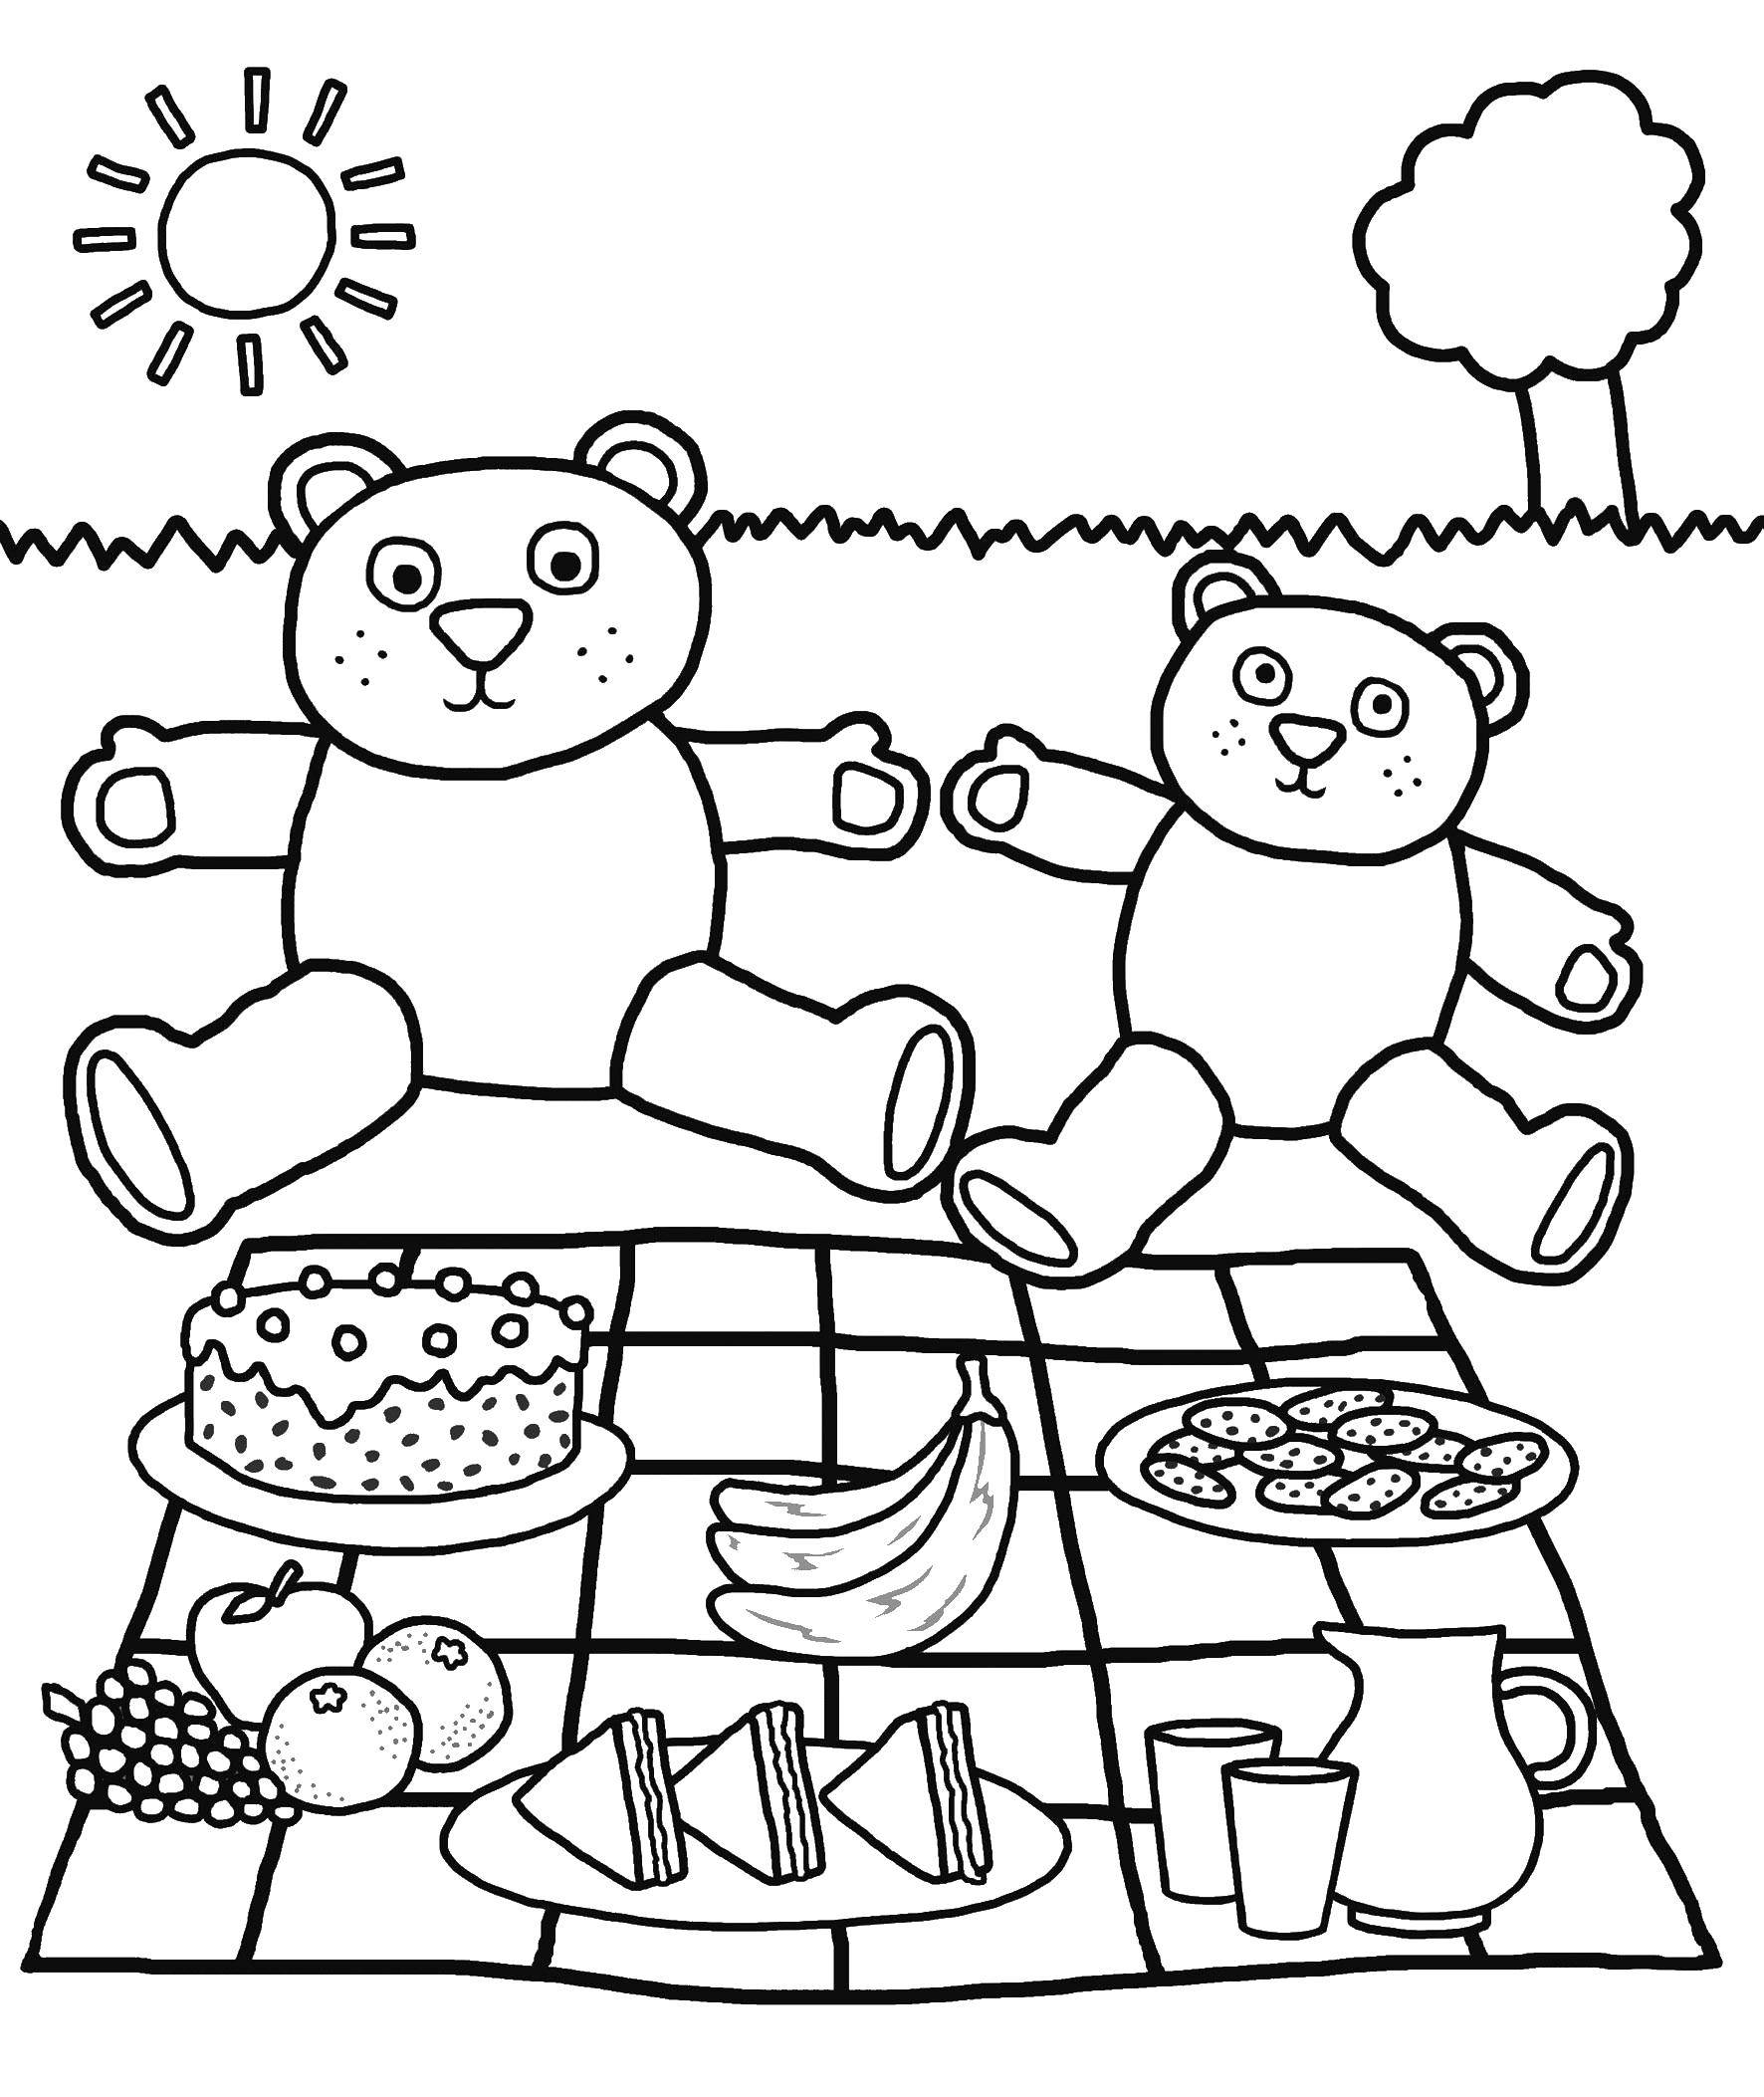 Название: Раскраска Медведи на пикнике. Категория: природа. Теги: медведь, пикник.